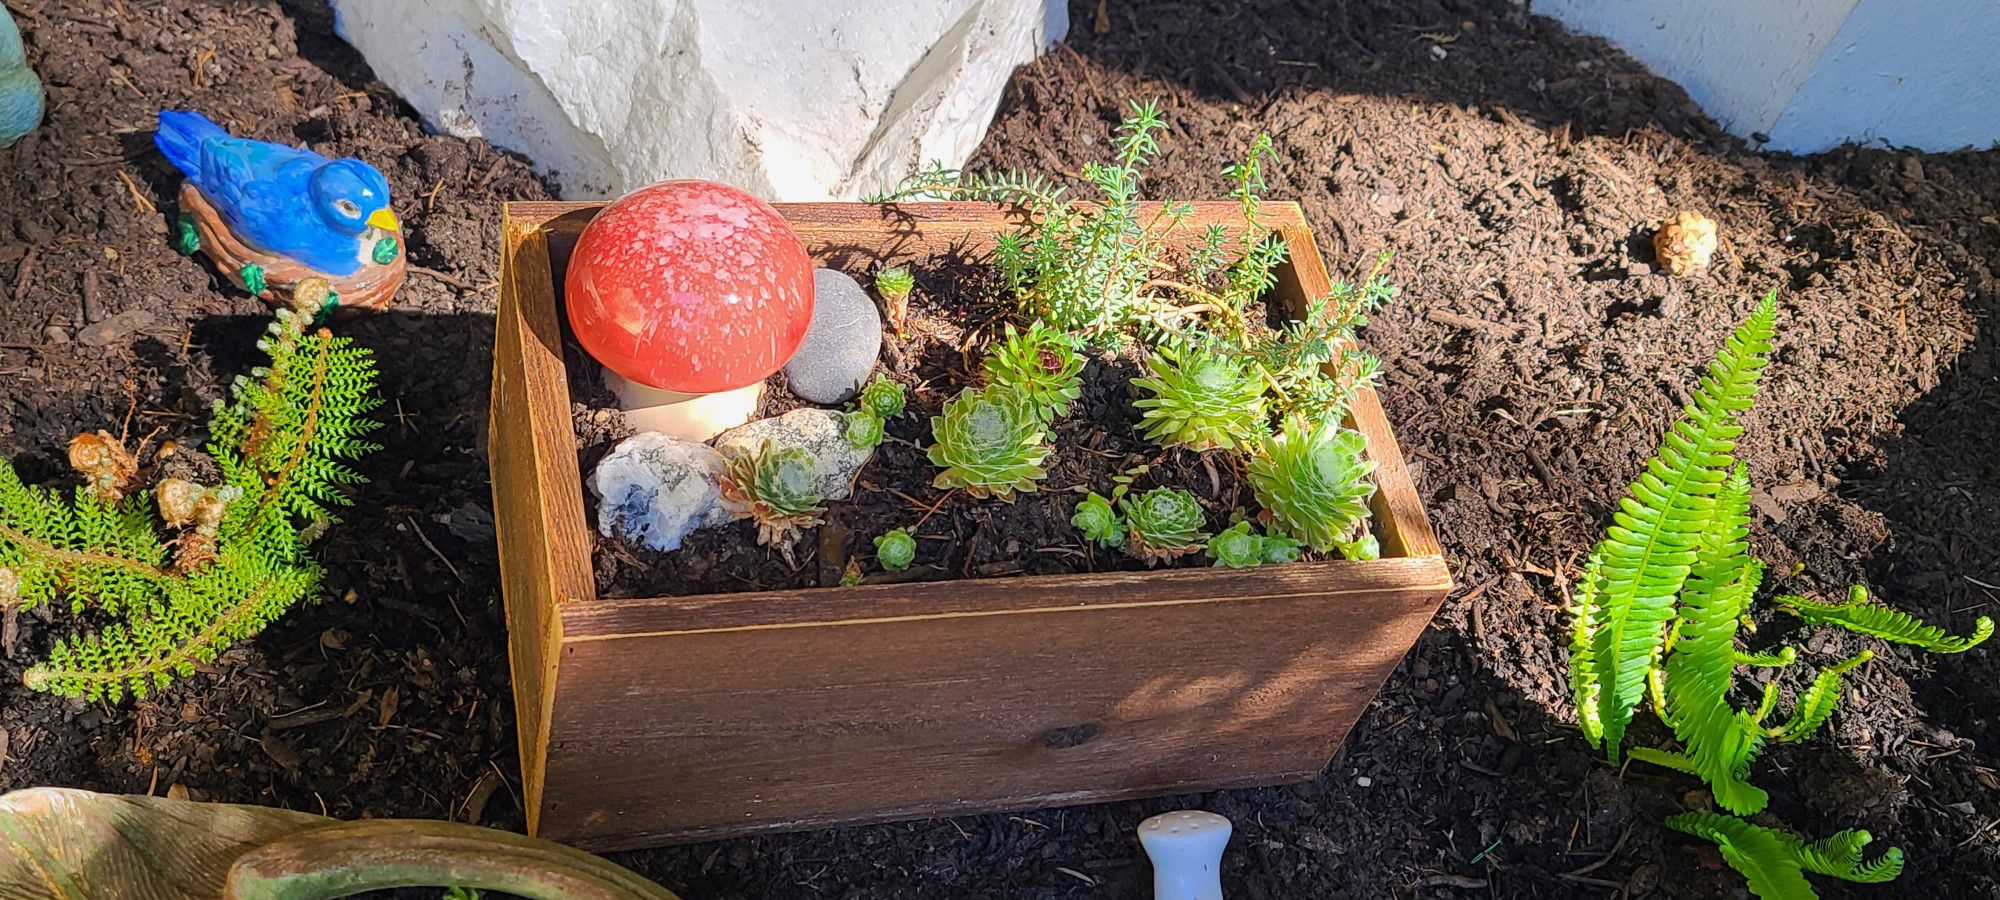 2  Handmade Cedar Planters With Succulents And Ceramic Mushrooms 